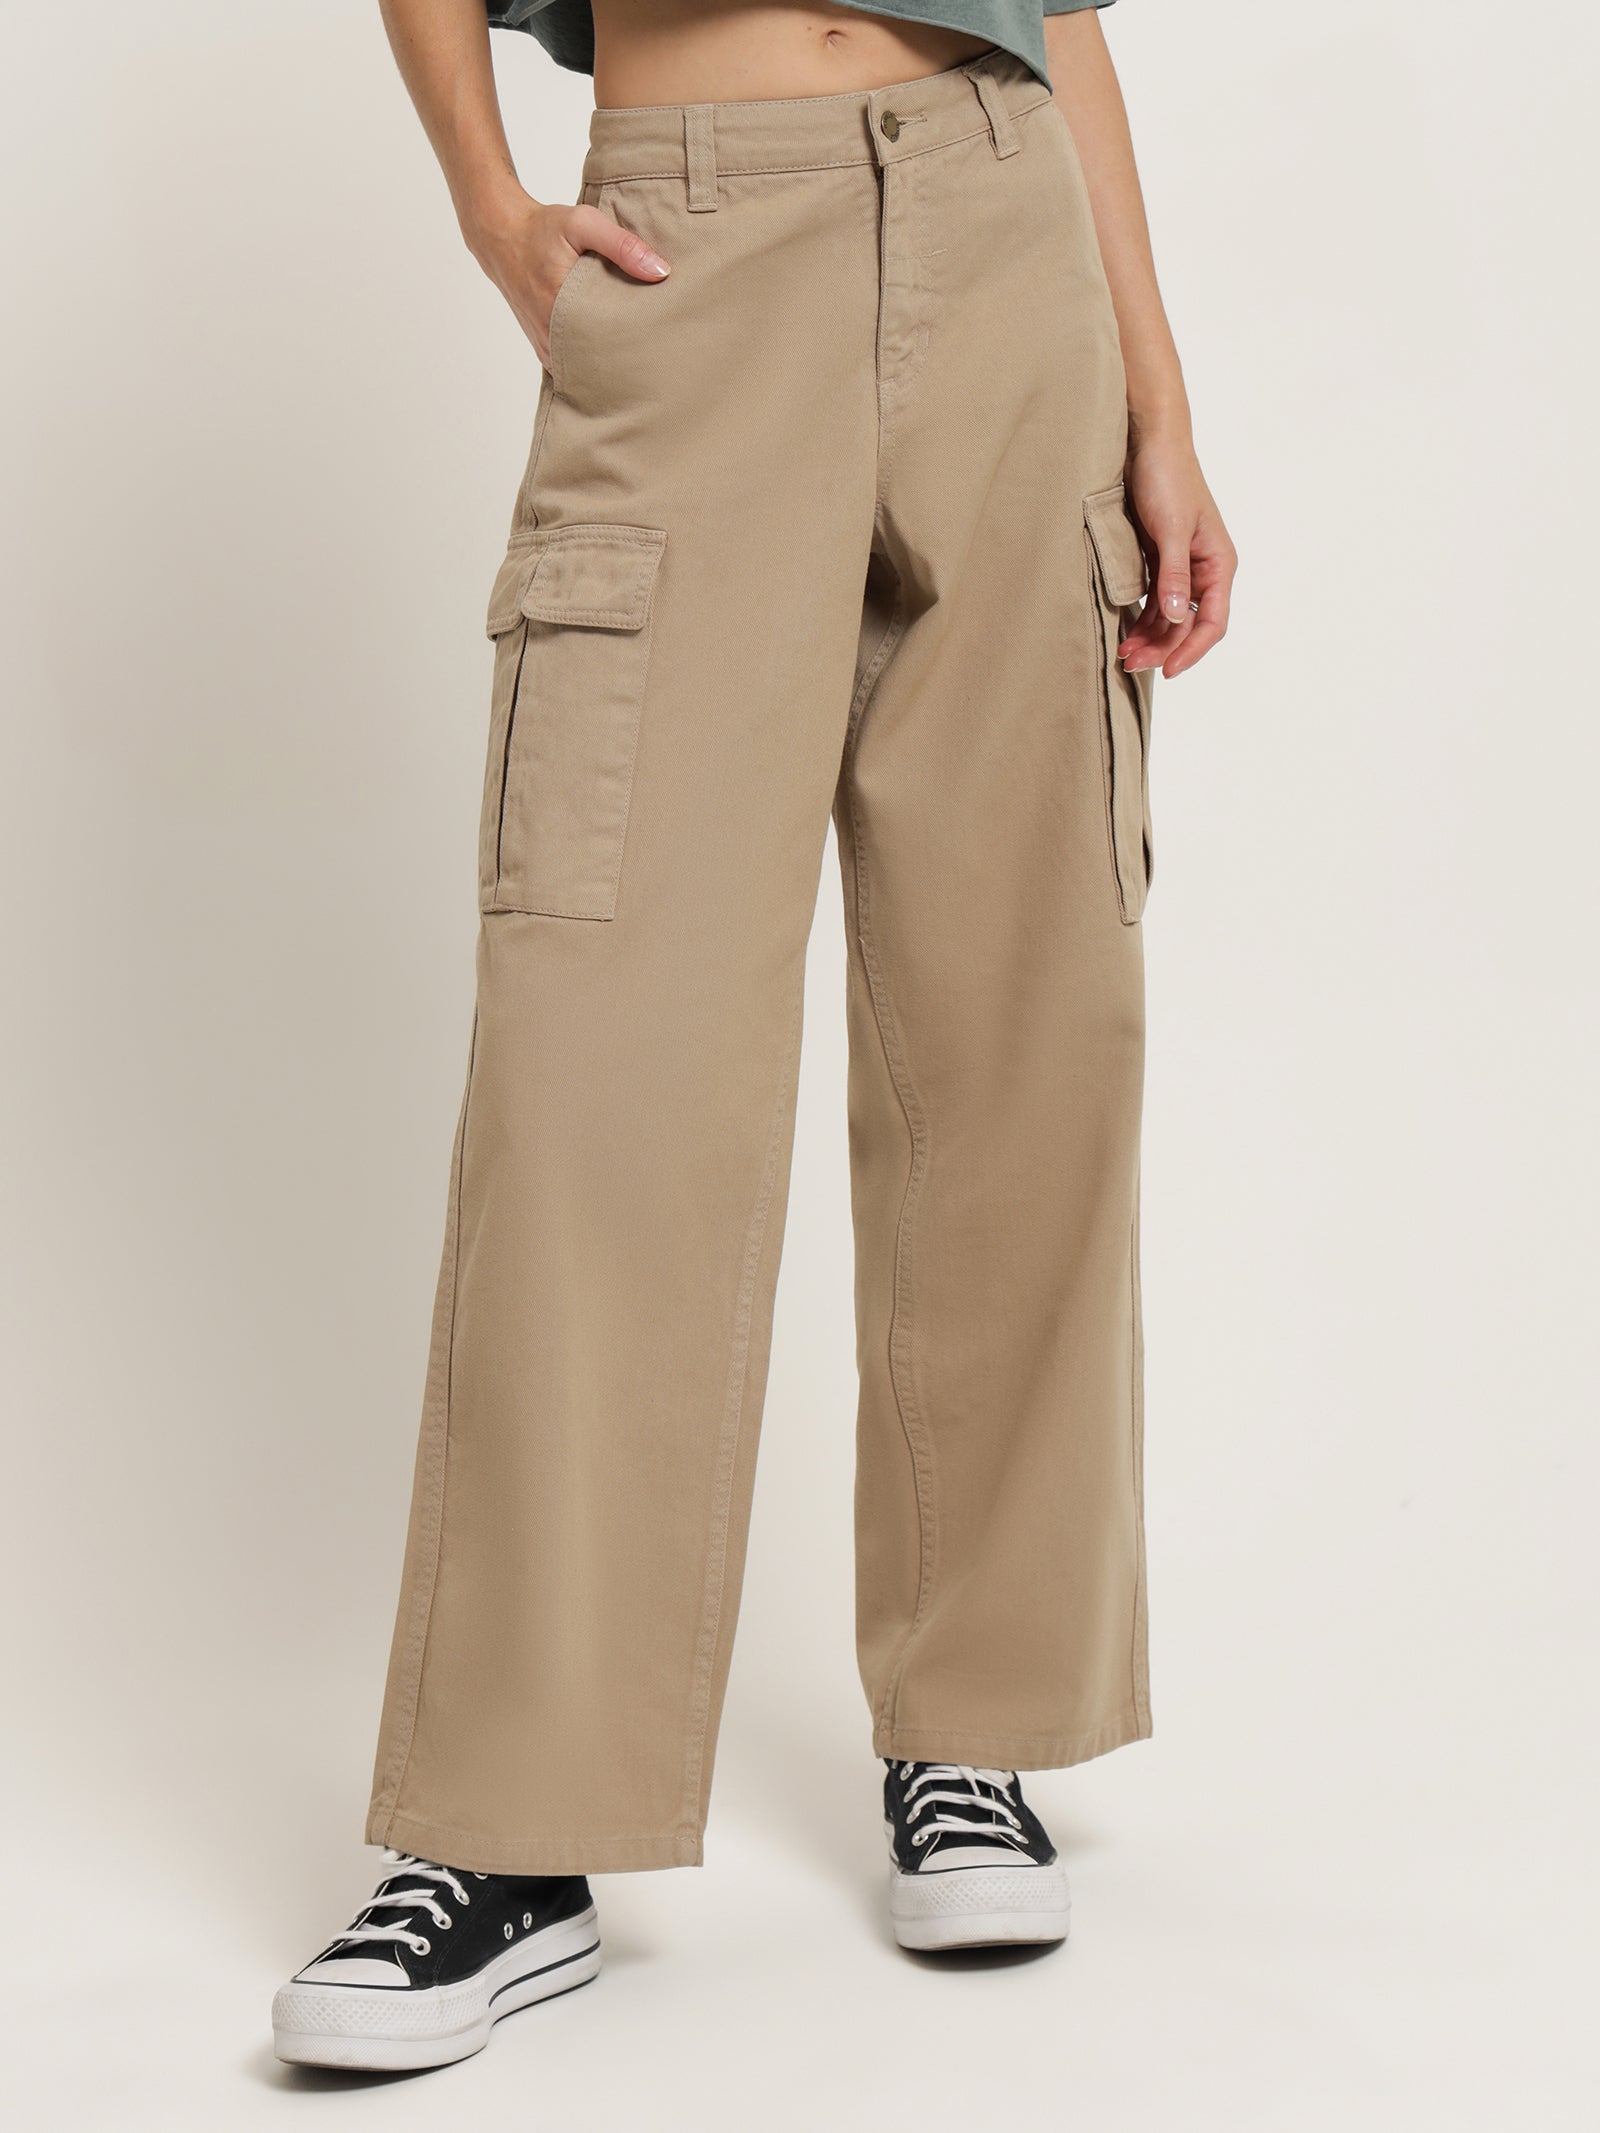 Women's Organic Cotton Baggy Cargo Pants in Authentic Khaki